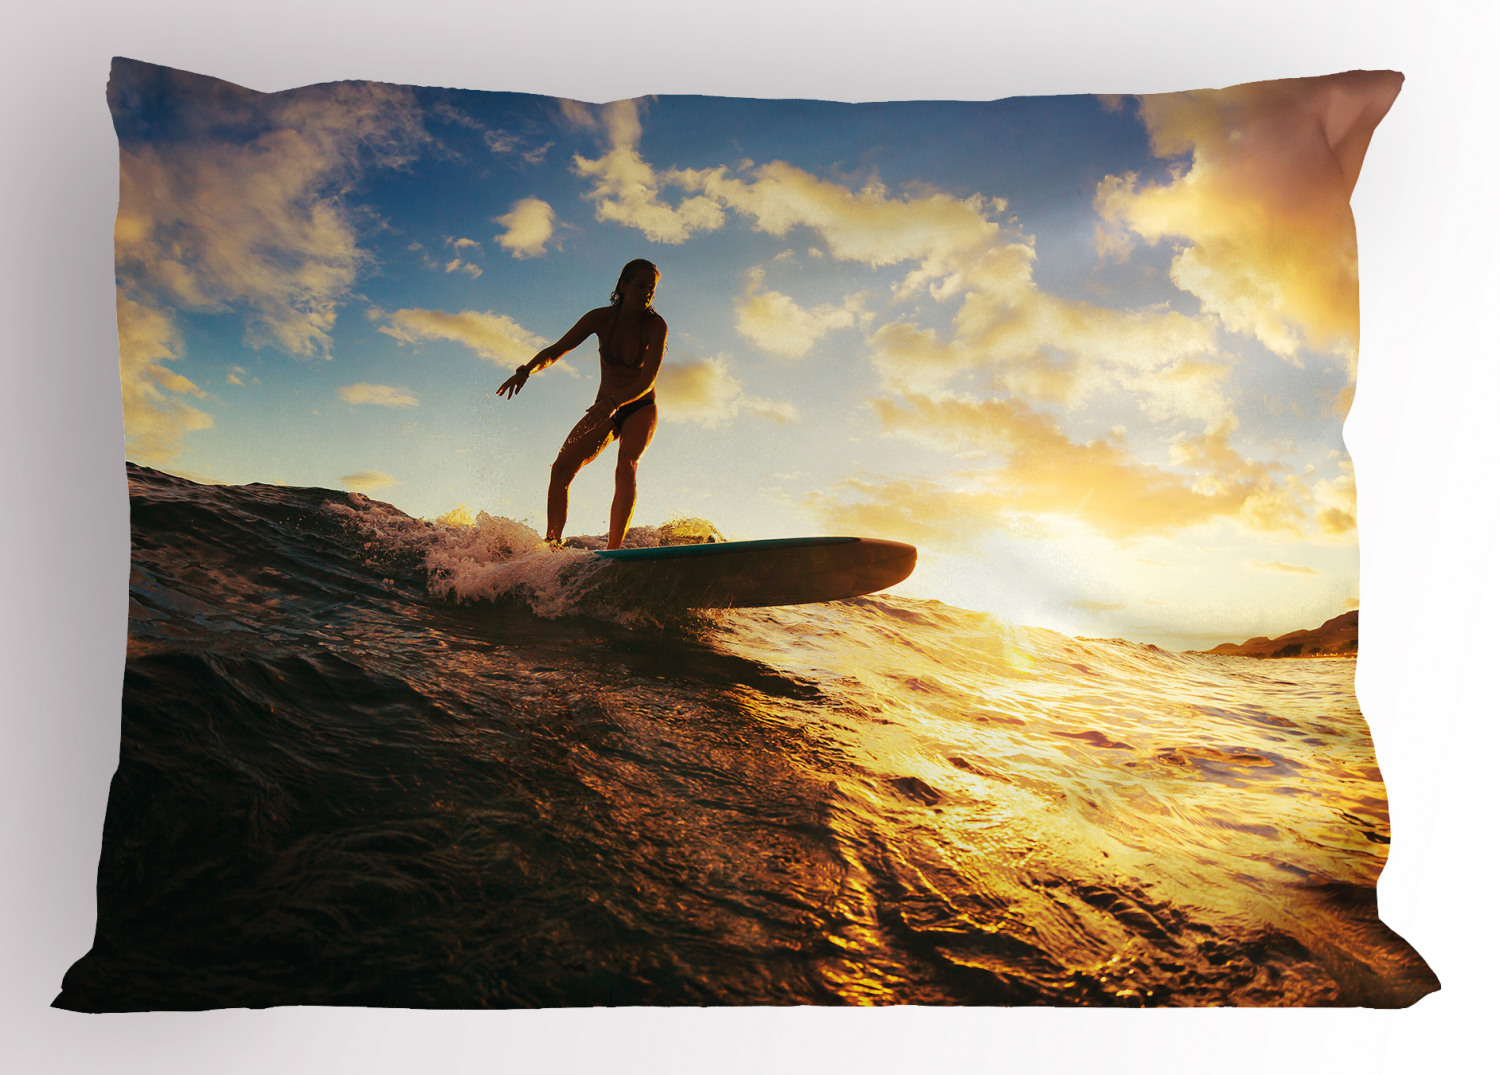 Details about   Ride the Wave Pillow Sham Decorative Pillowcase 3 Sizes Bedroom Decor Ambesonne 